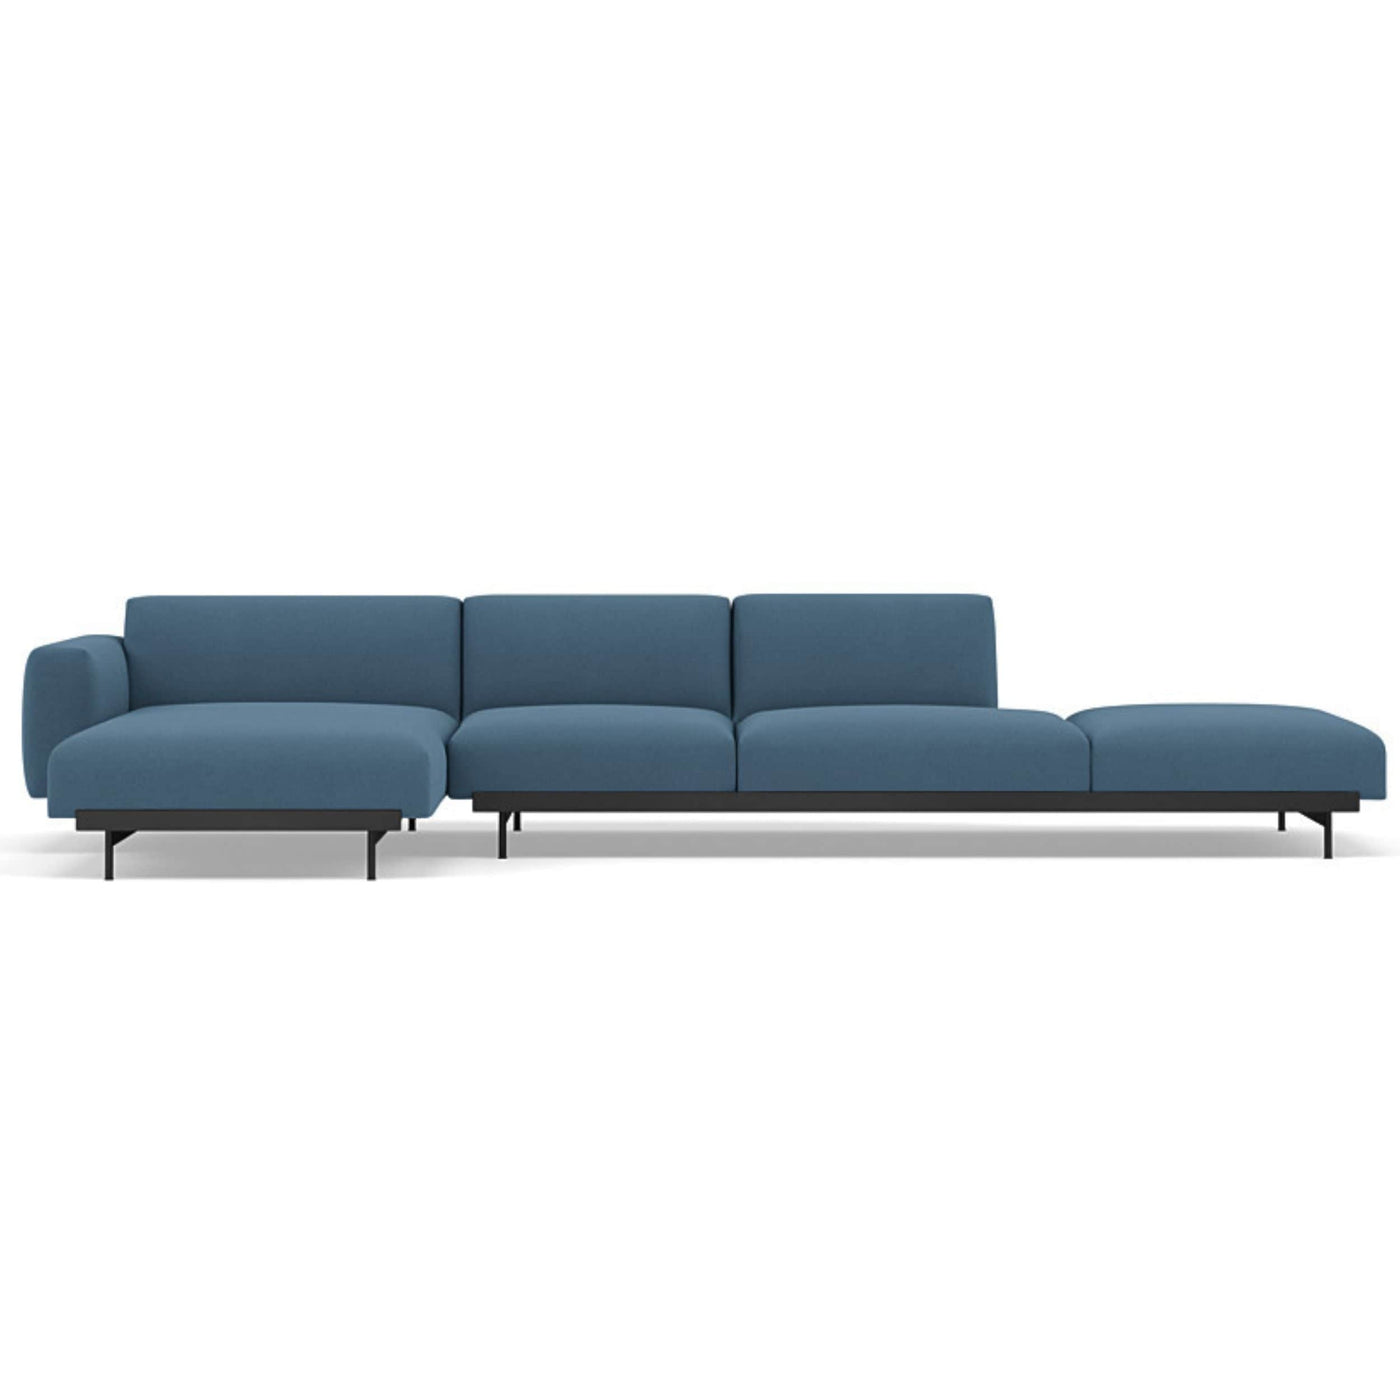 Muuto In Situ Modular 4 Seater Sofa configuration 5 in vidar 733. Made to order from someday designs. #colour_vidar-733